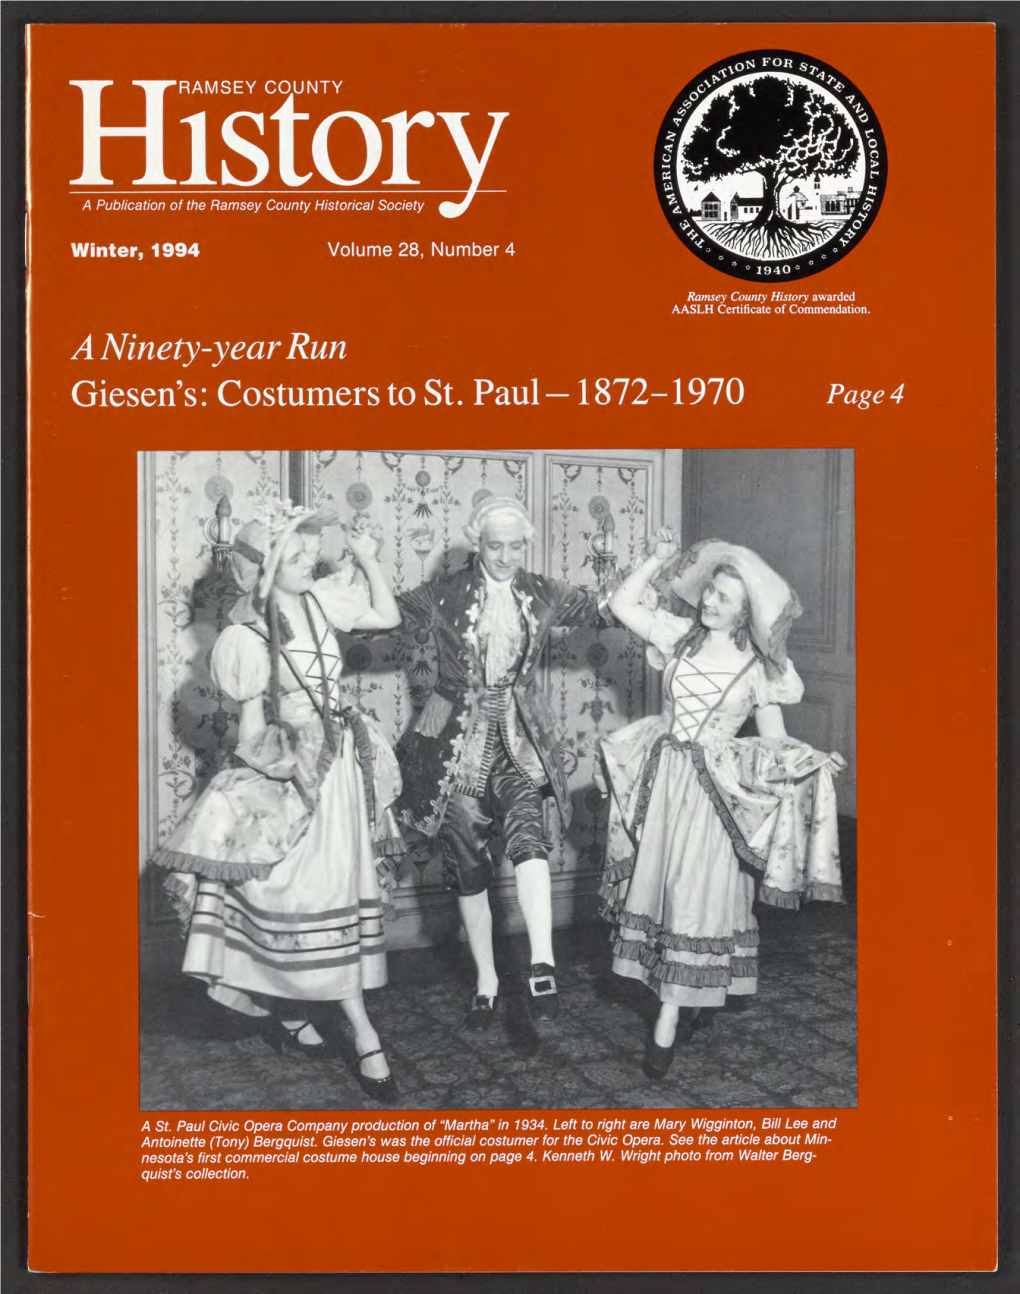 Giesen's: Costumers to St. Paul—1872-1970